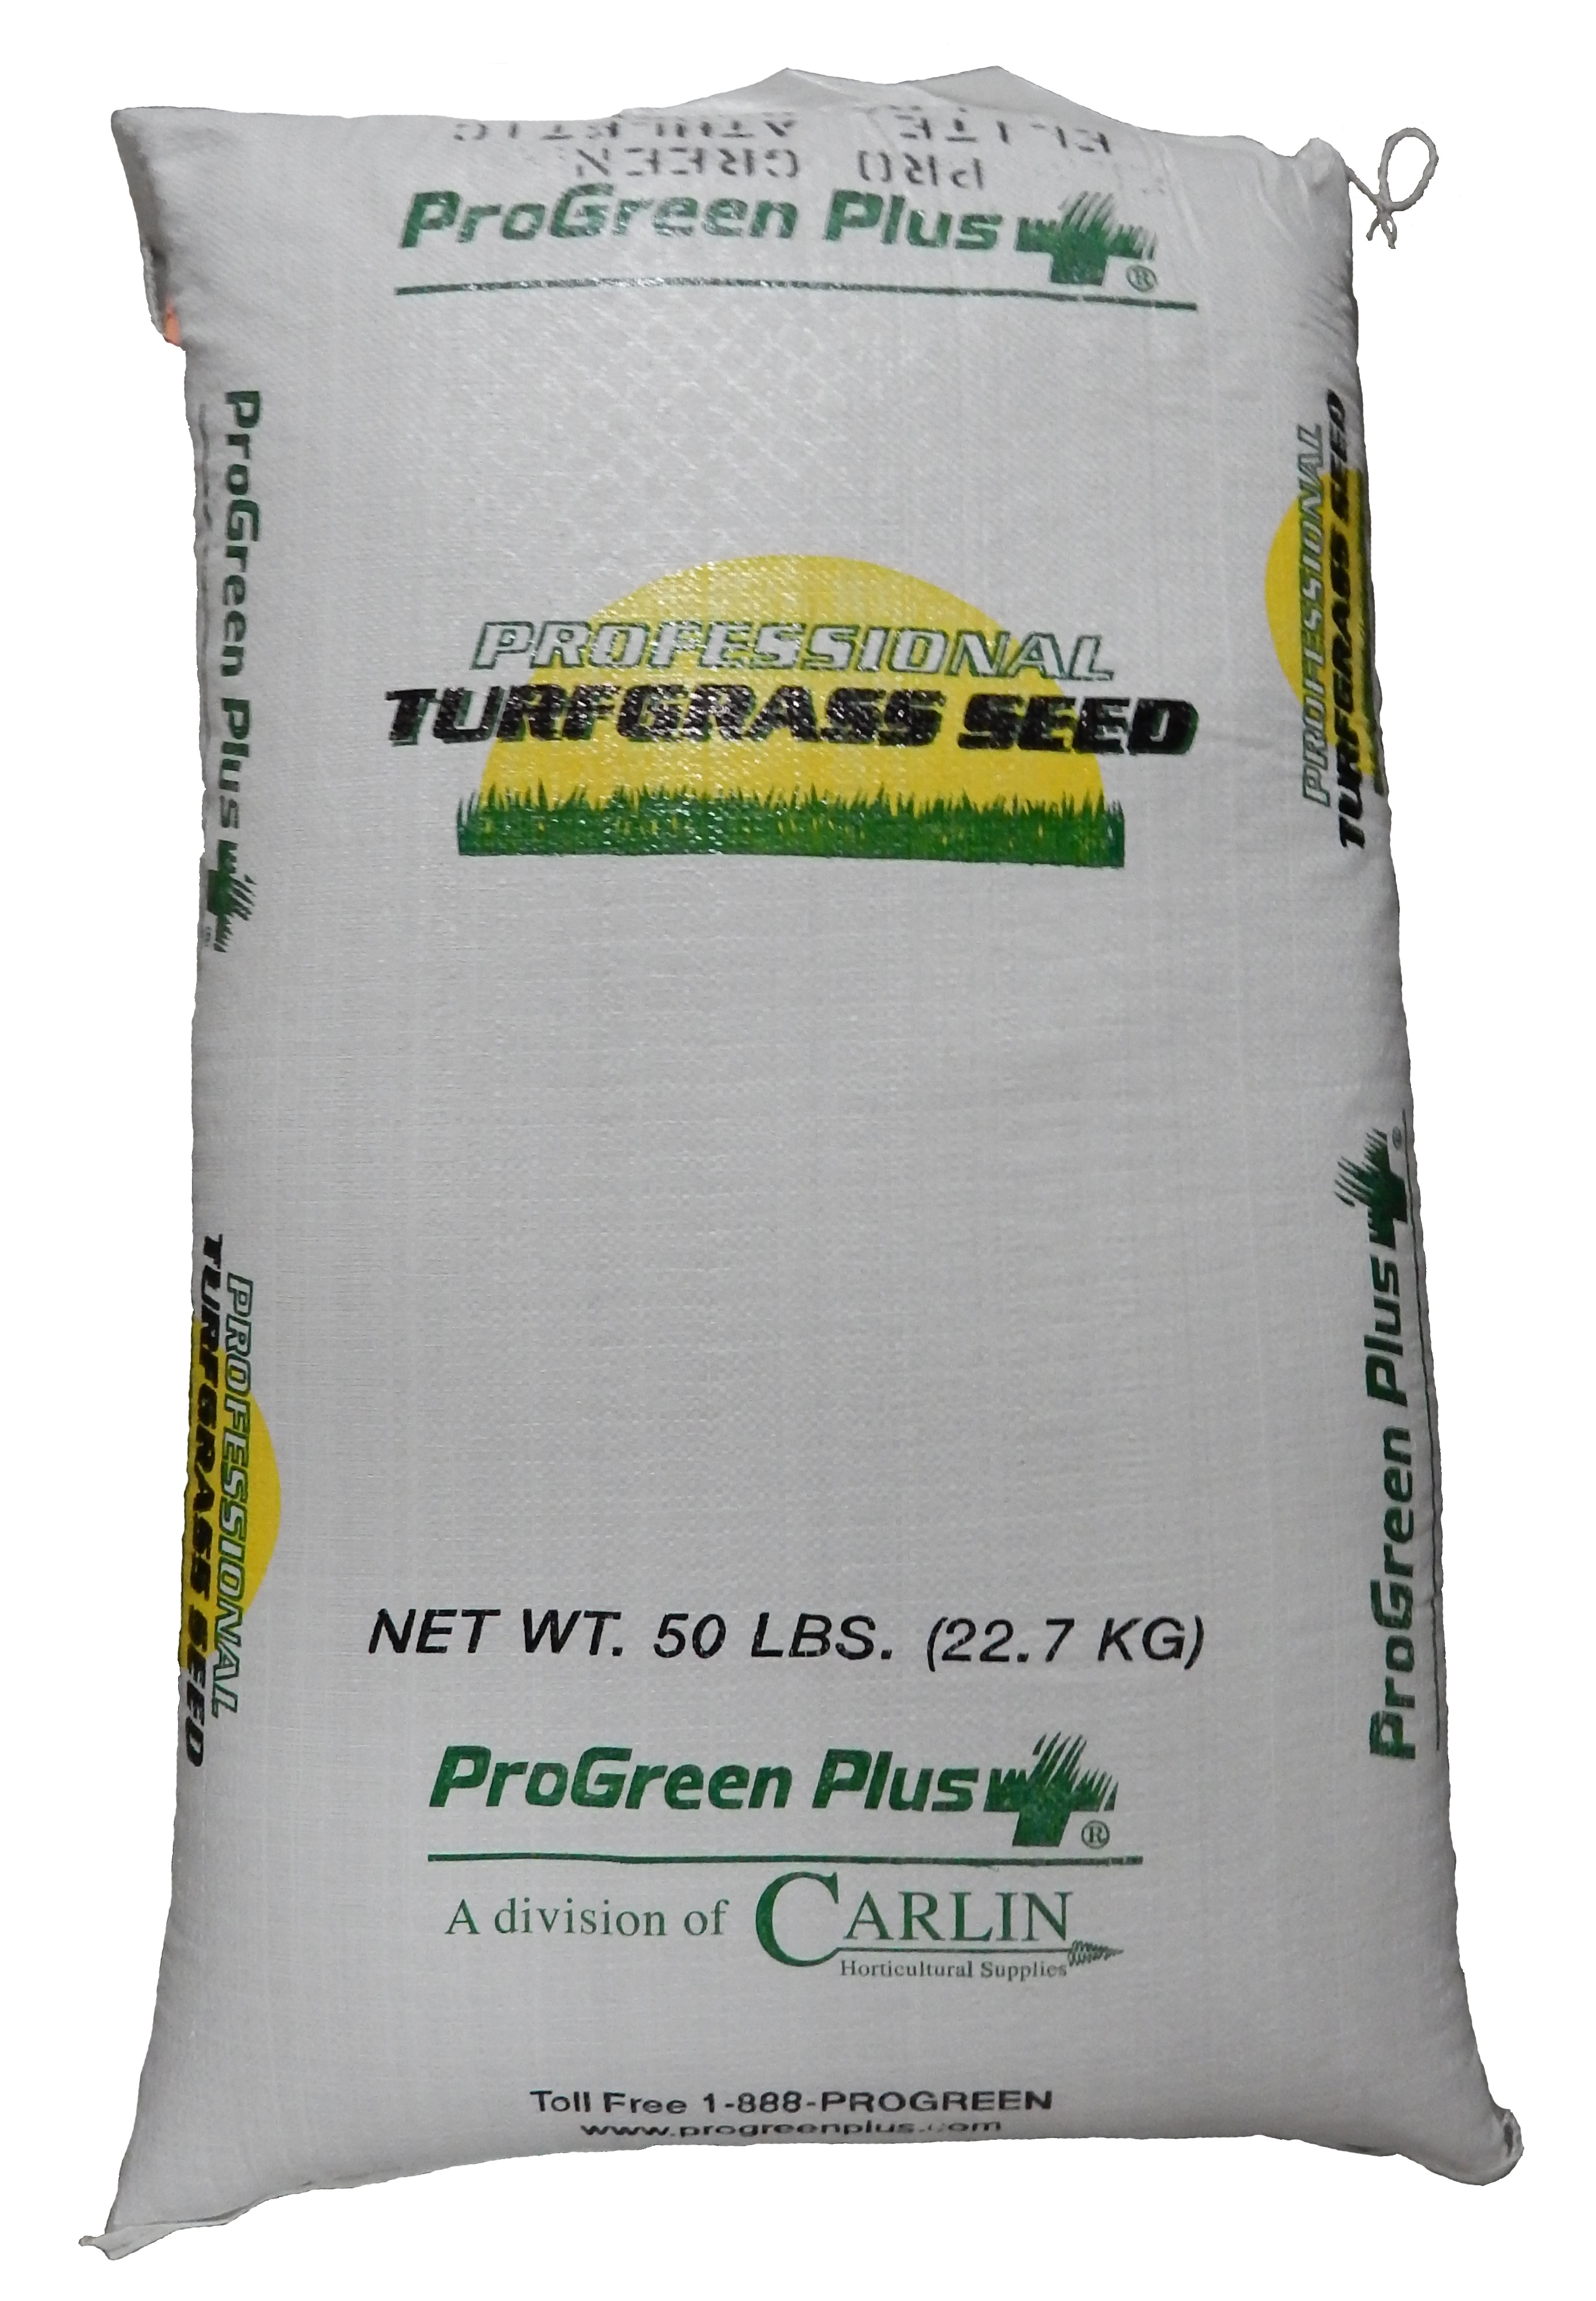 ProGreen 600 Coated Seed 50 lb Bag - 40 per pallet - Turfgrass Seed